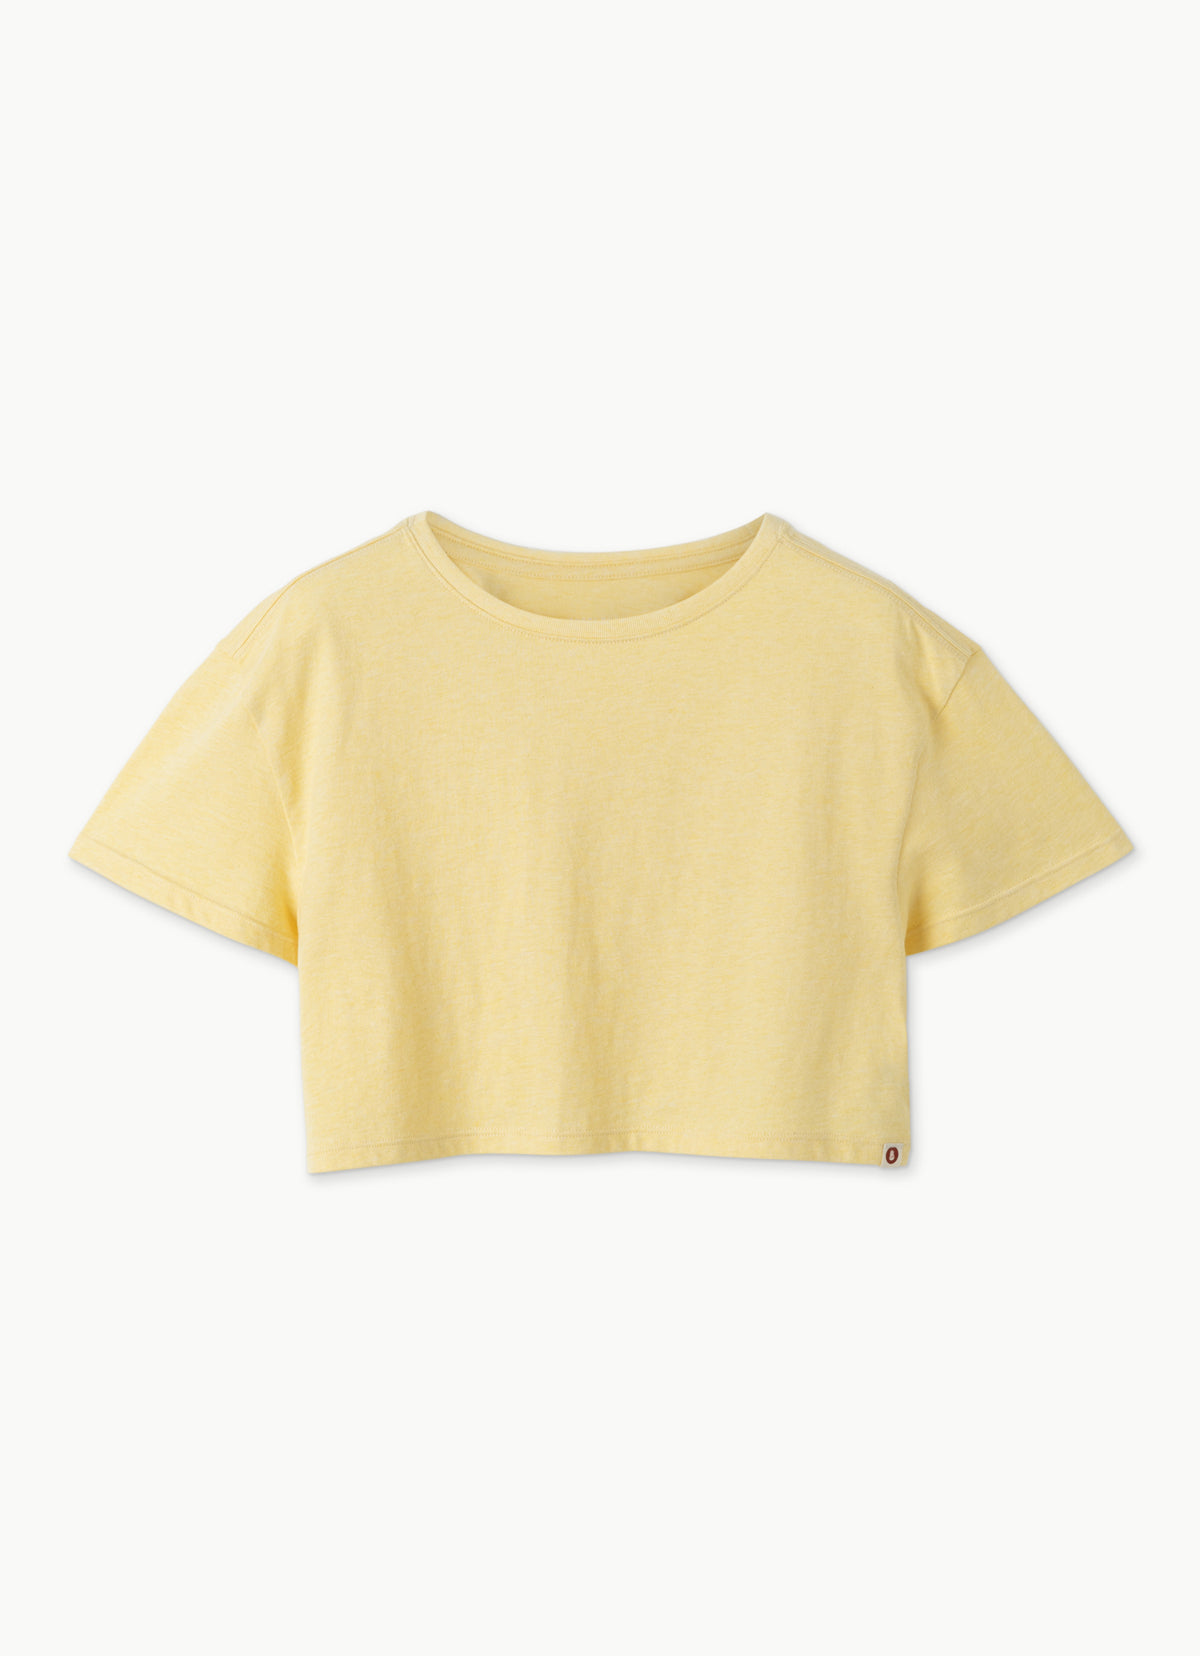 Kona short sleeve #2_Melange Yellow